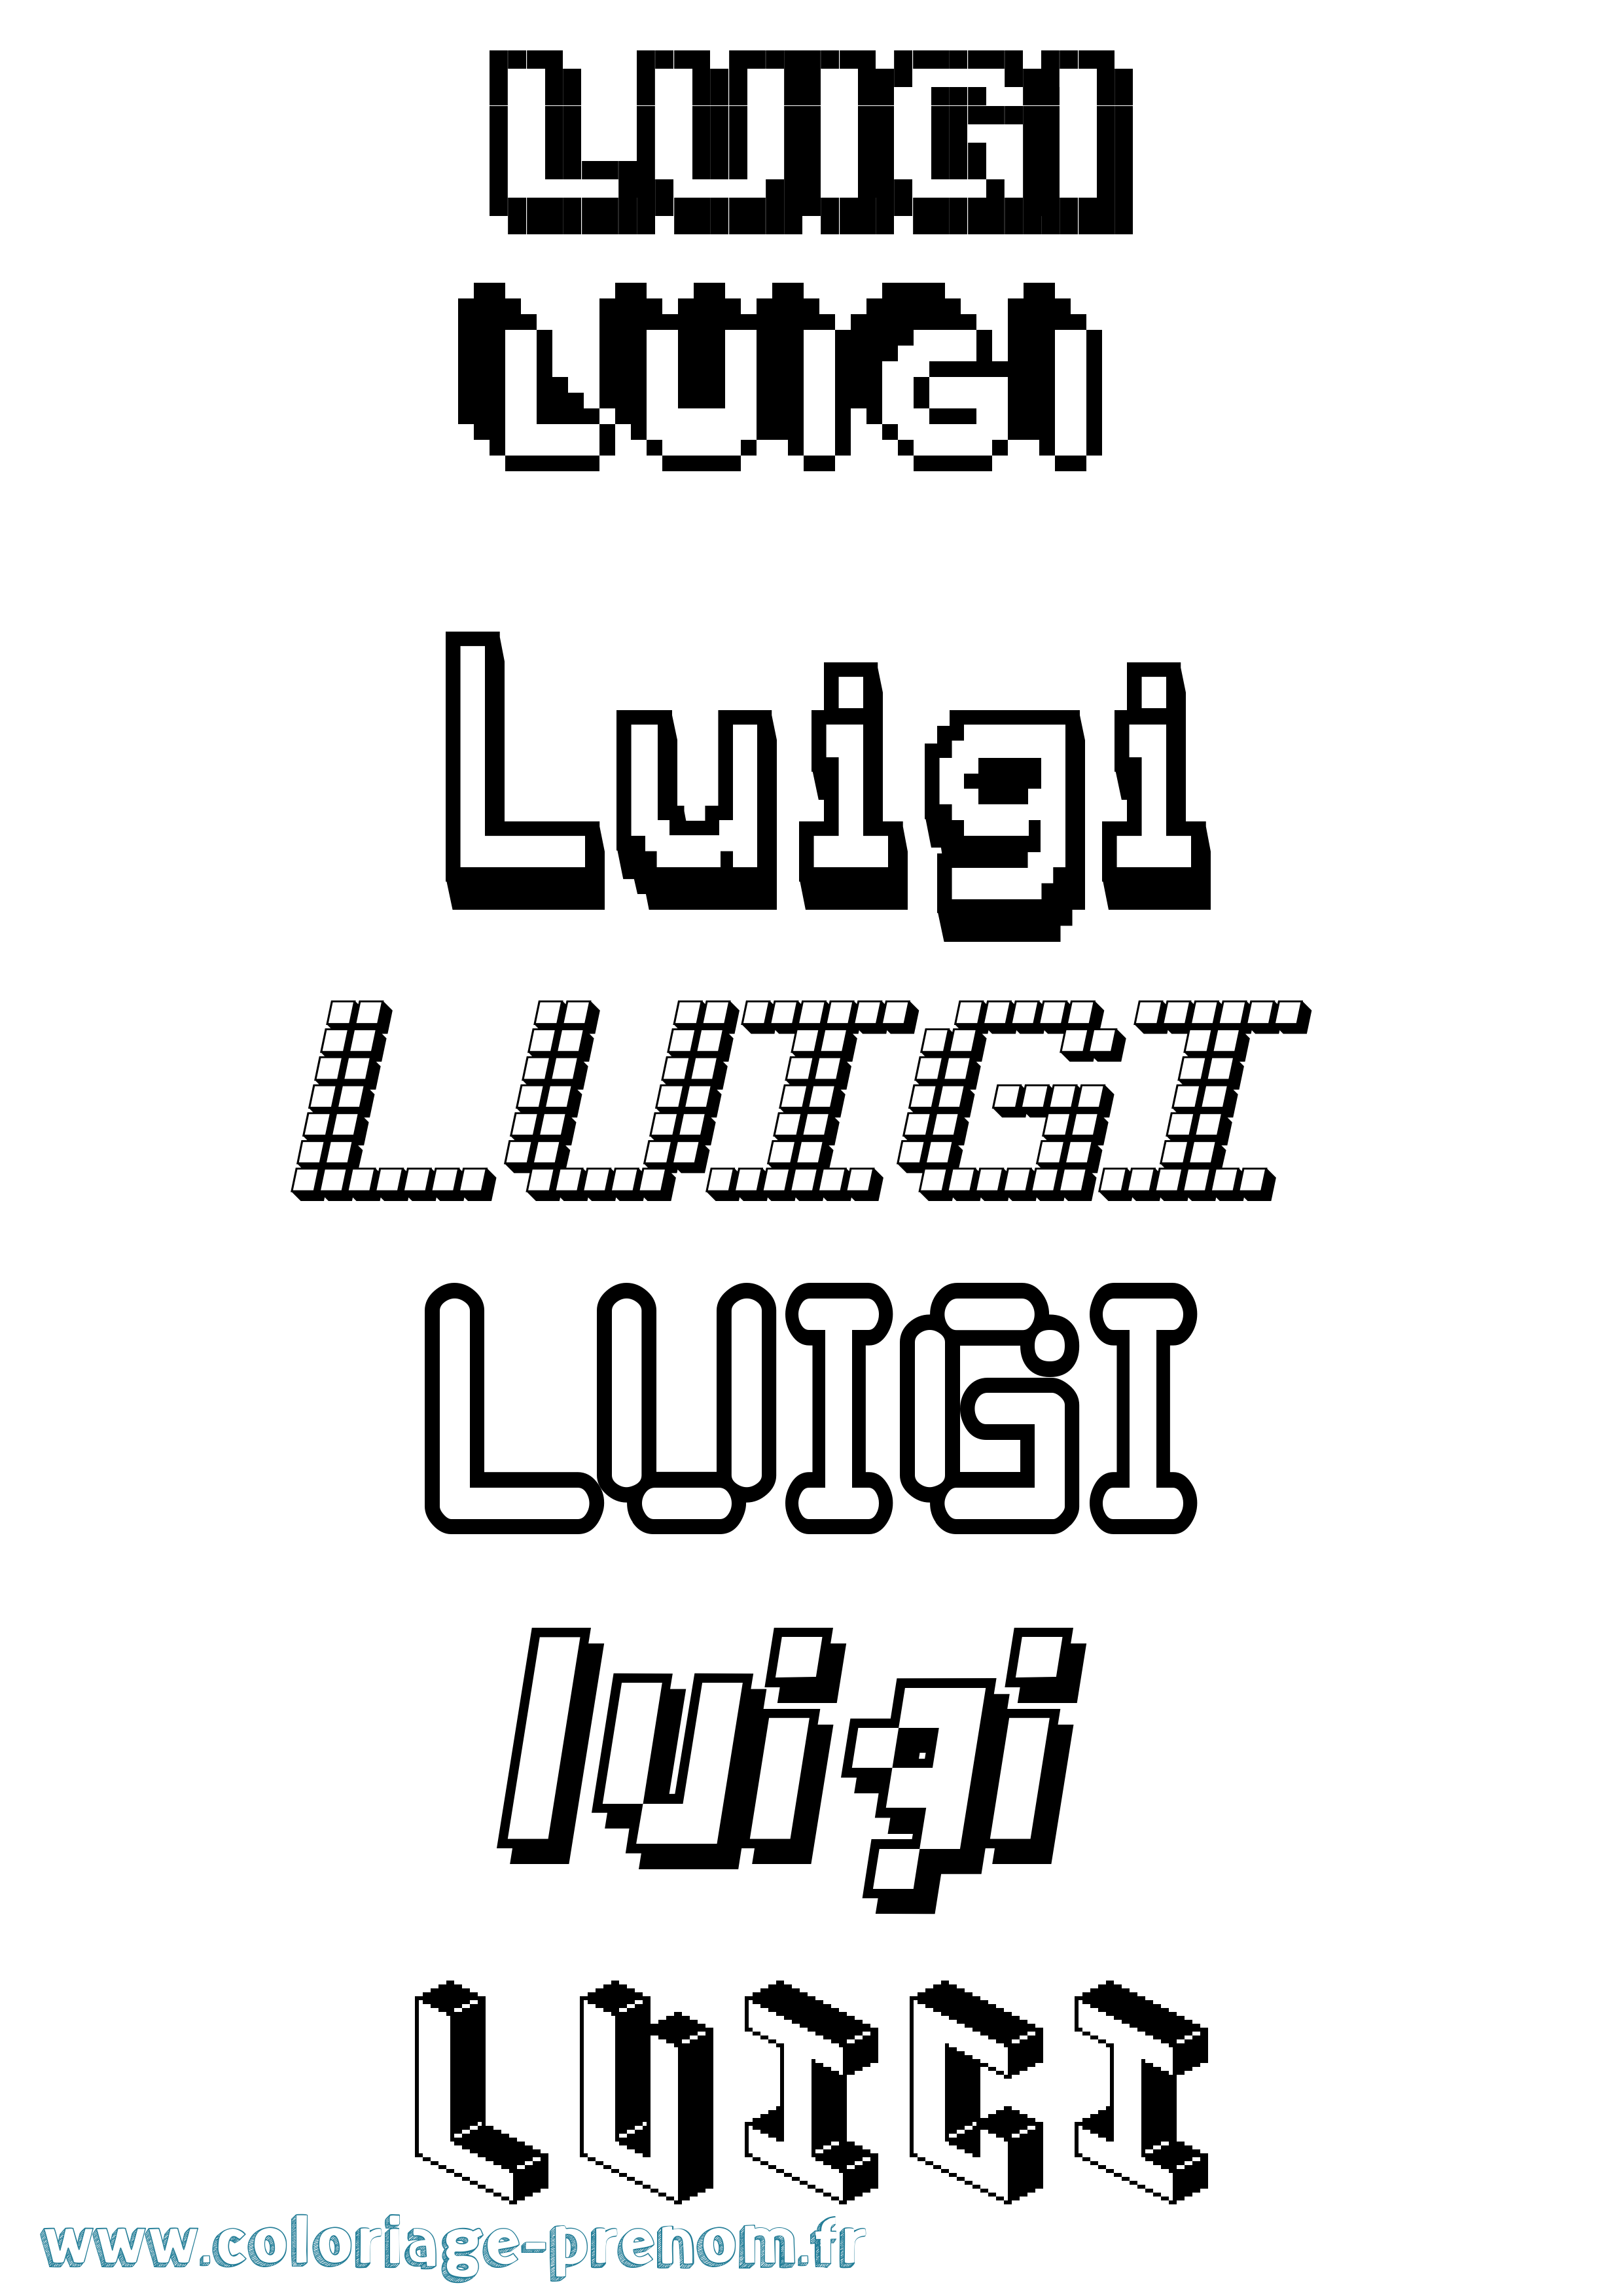 Coloriage prénom Luigi Pixel